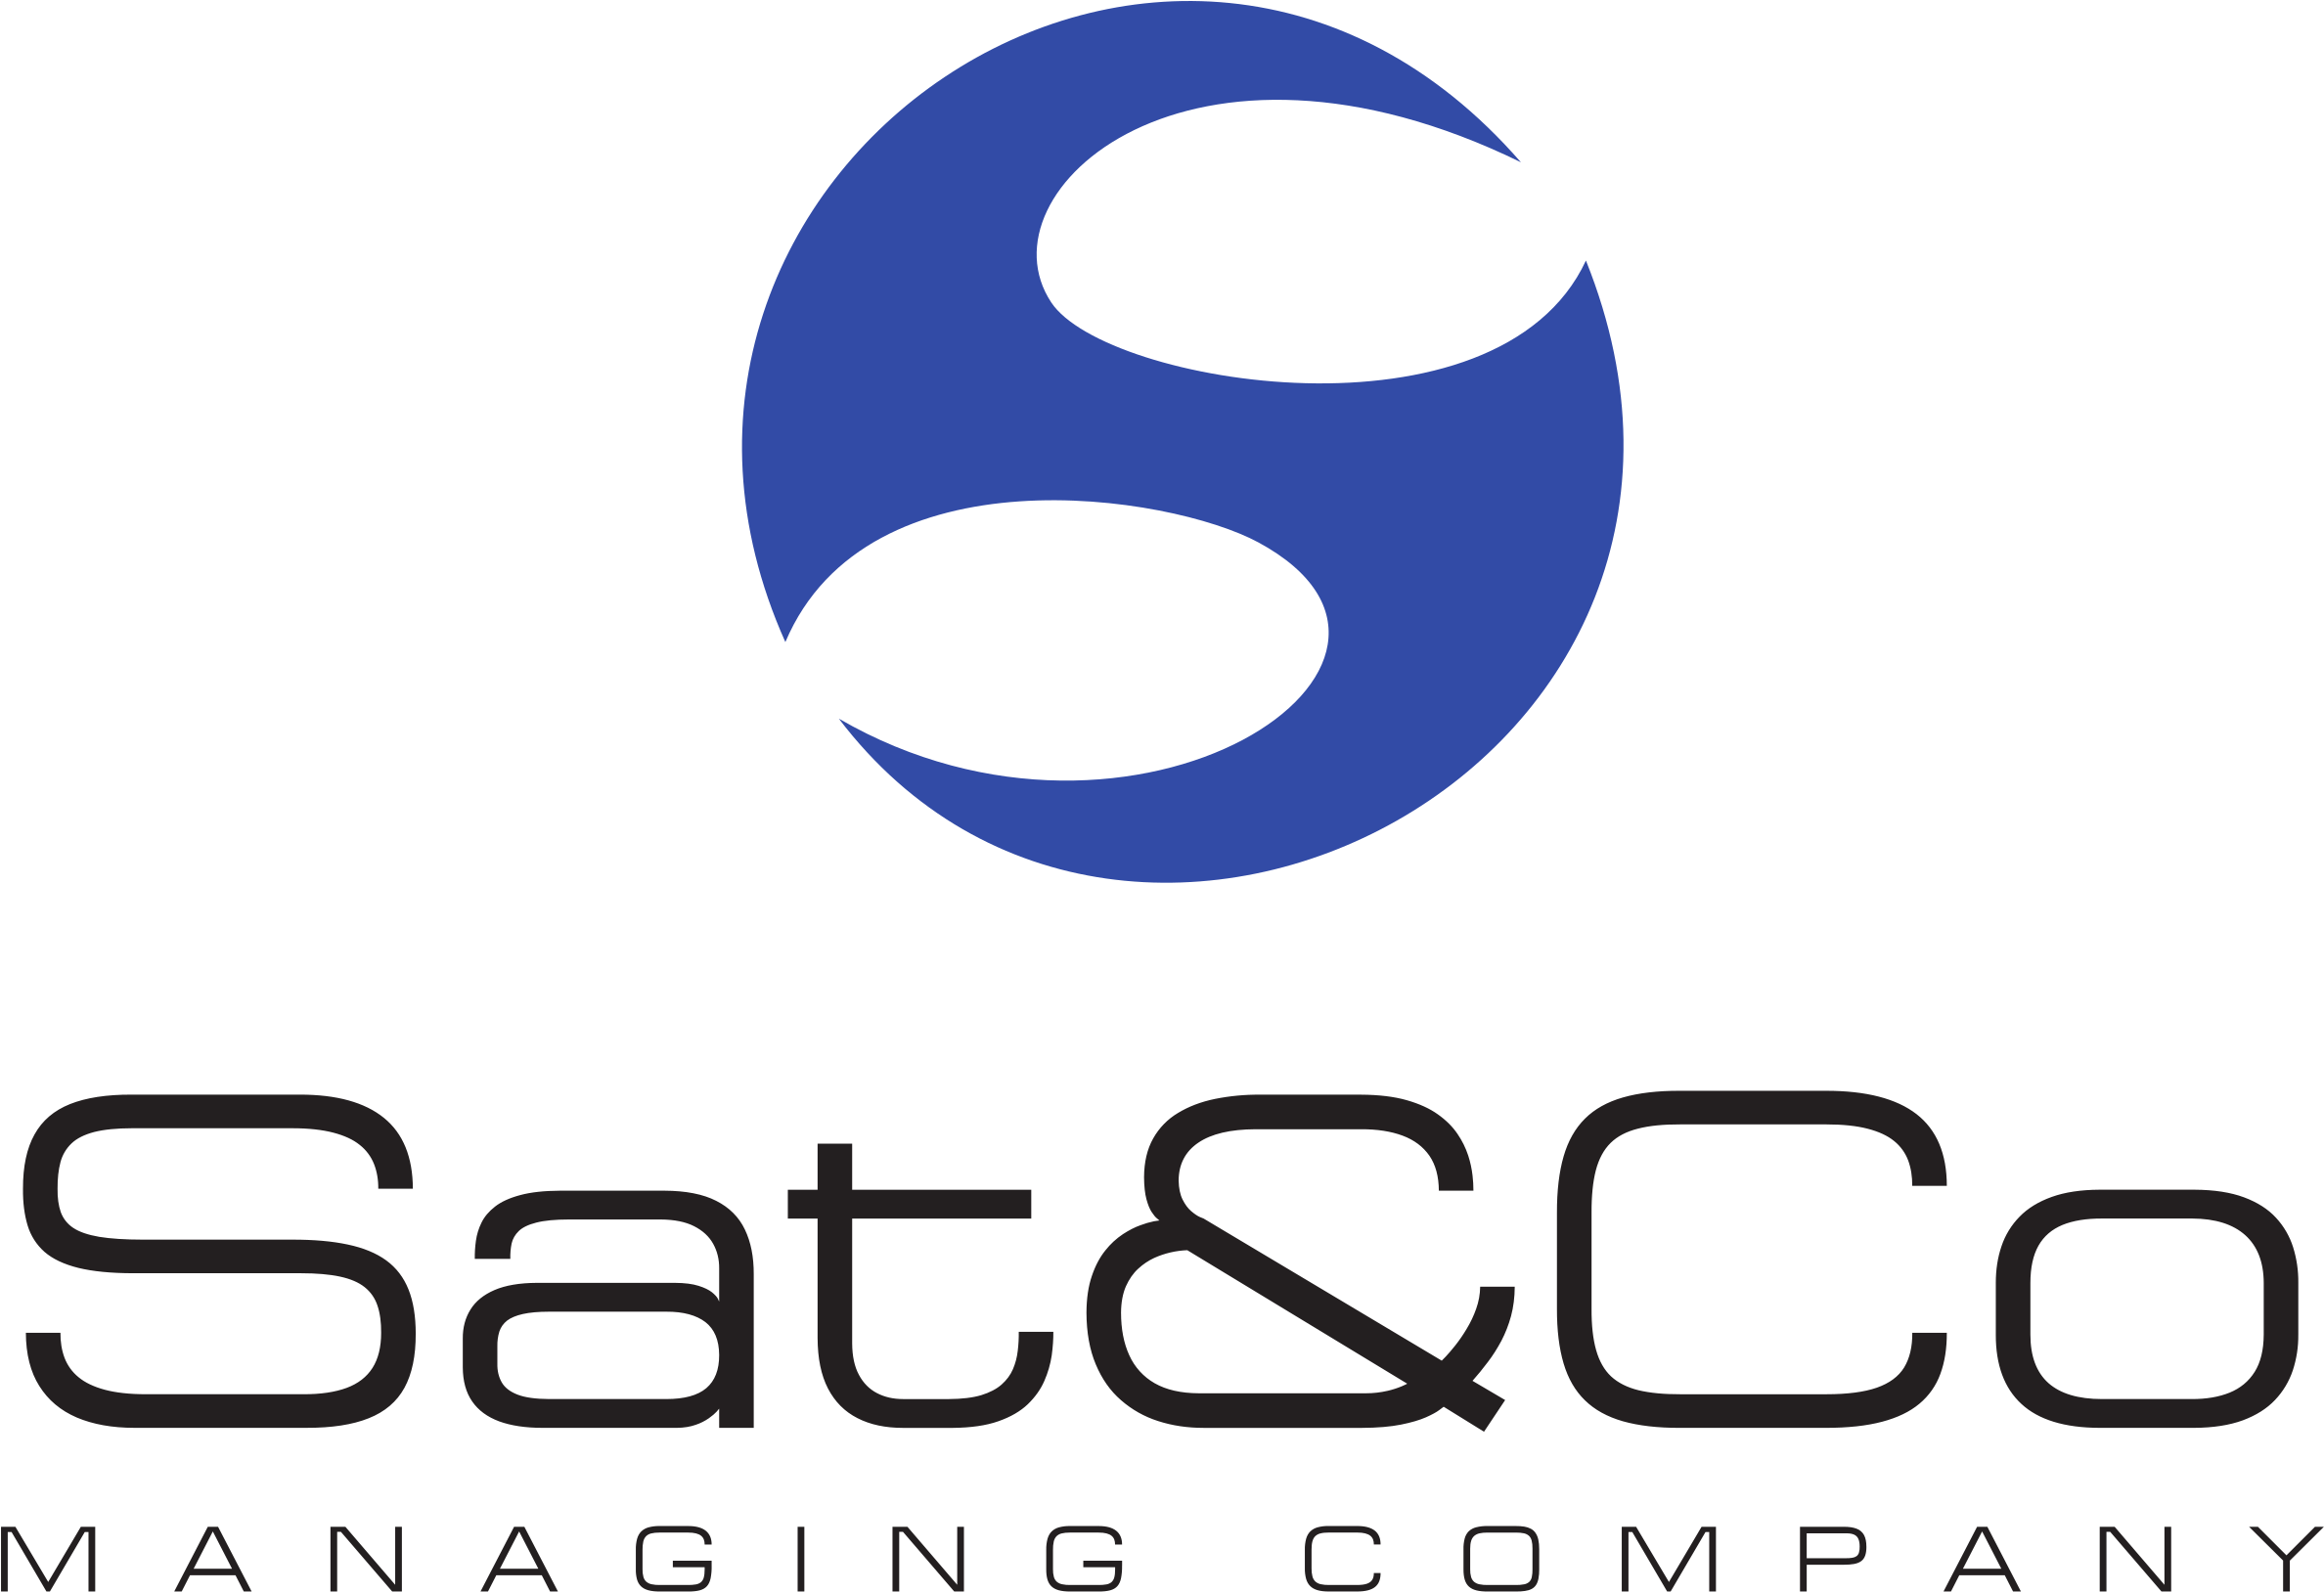 Sat&co Logo Png Transparent - Sat&co Logo Clipart (2400x1642), Png Download